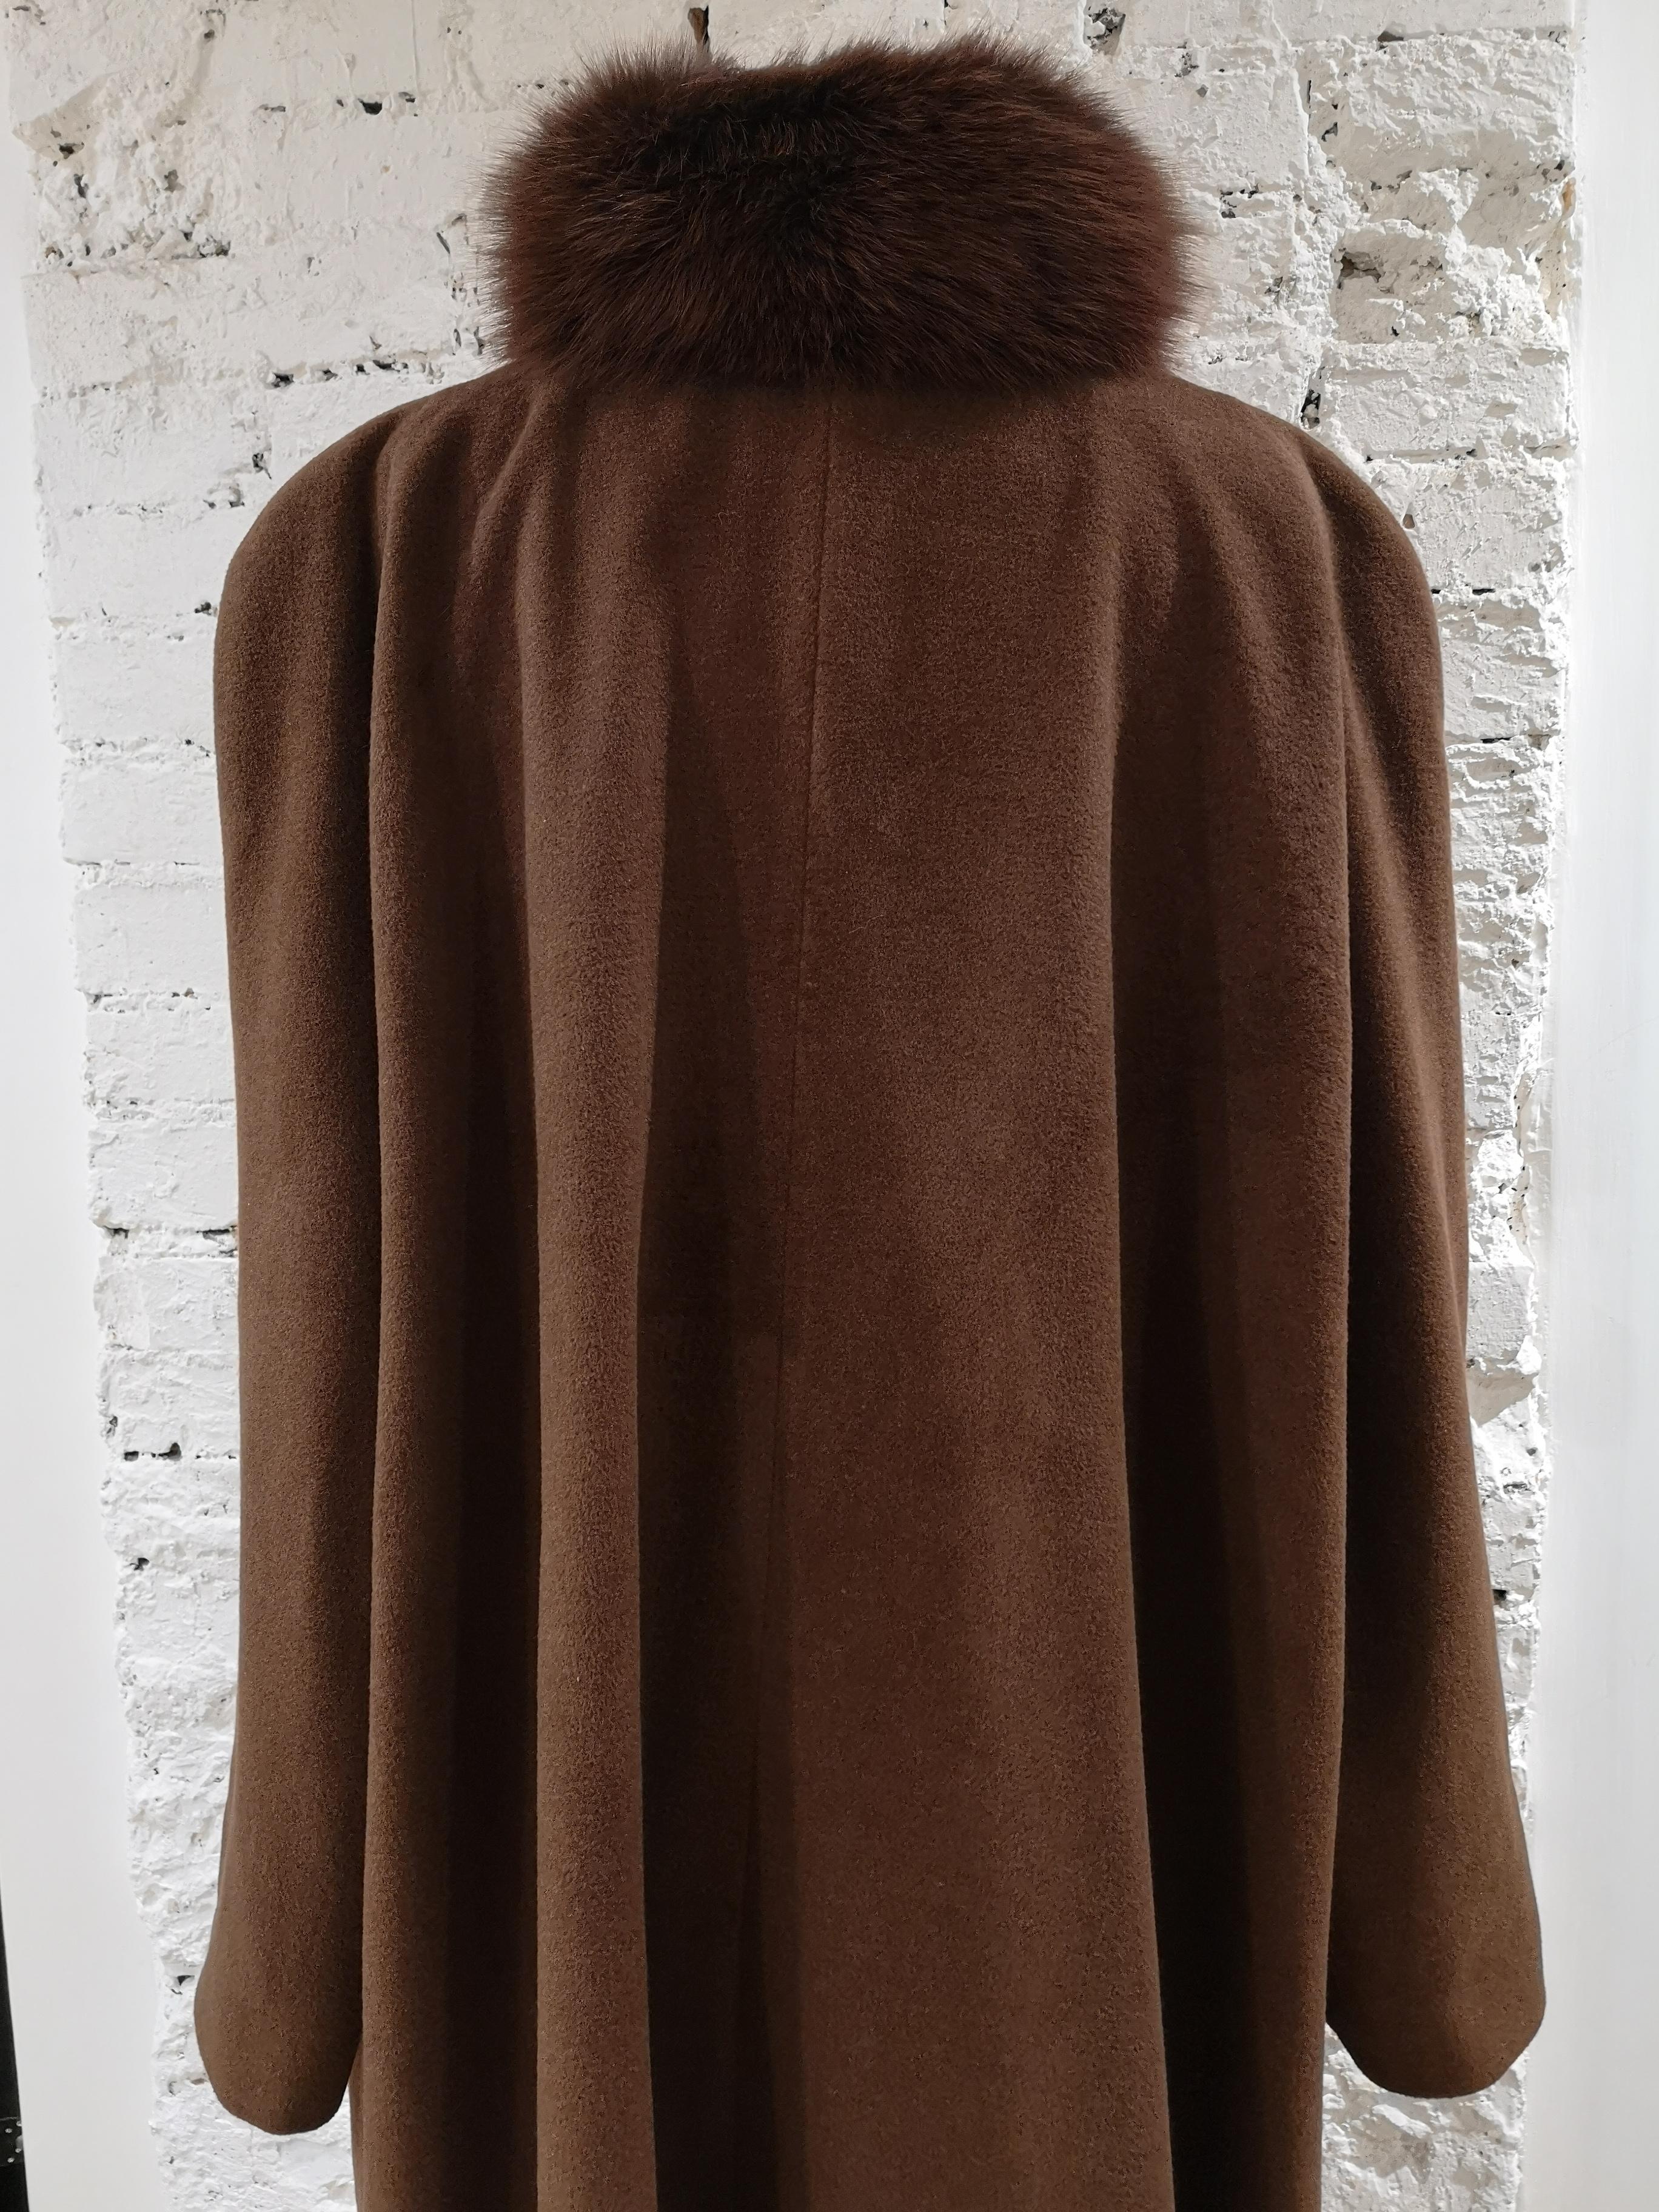 Gai Mattiolo brown wool cachemire coat For Sale 1